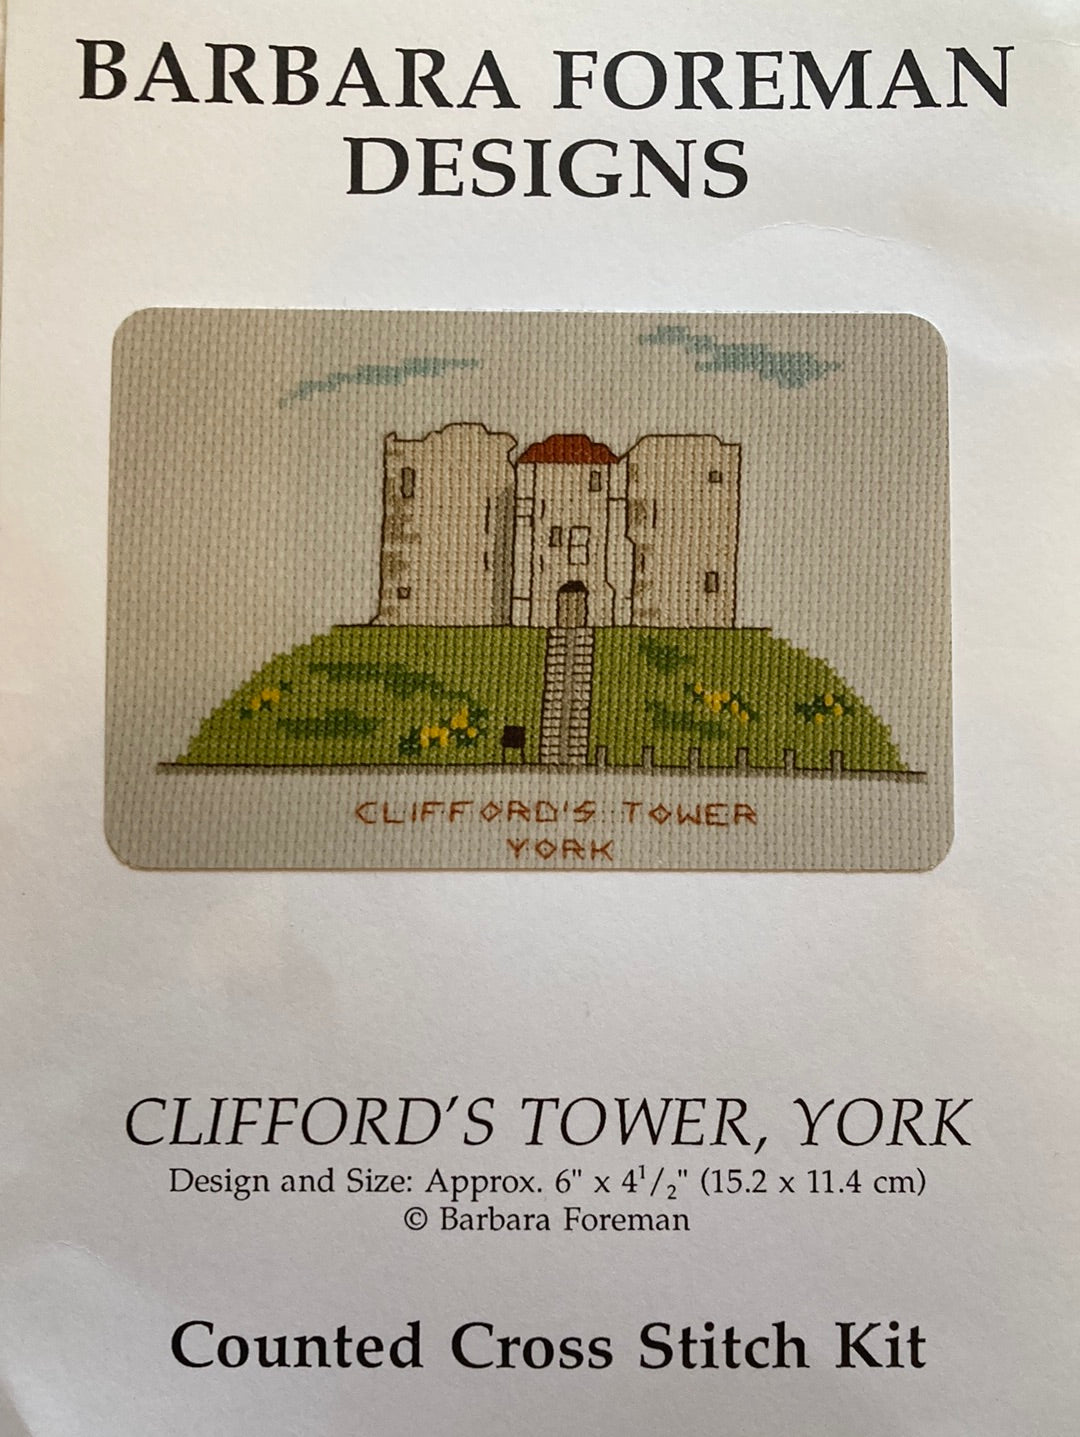 Cliffords Tower, York by Barbara Foreman Designs